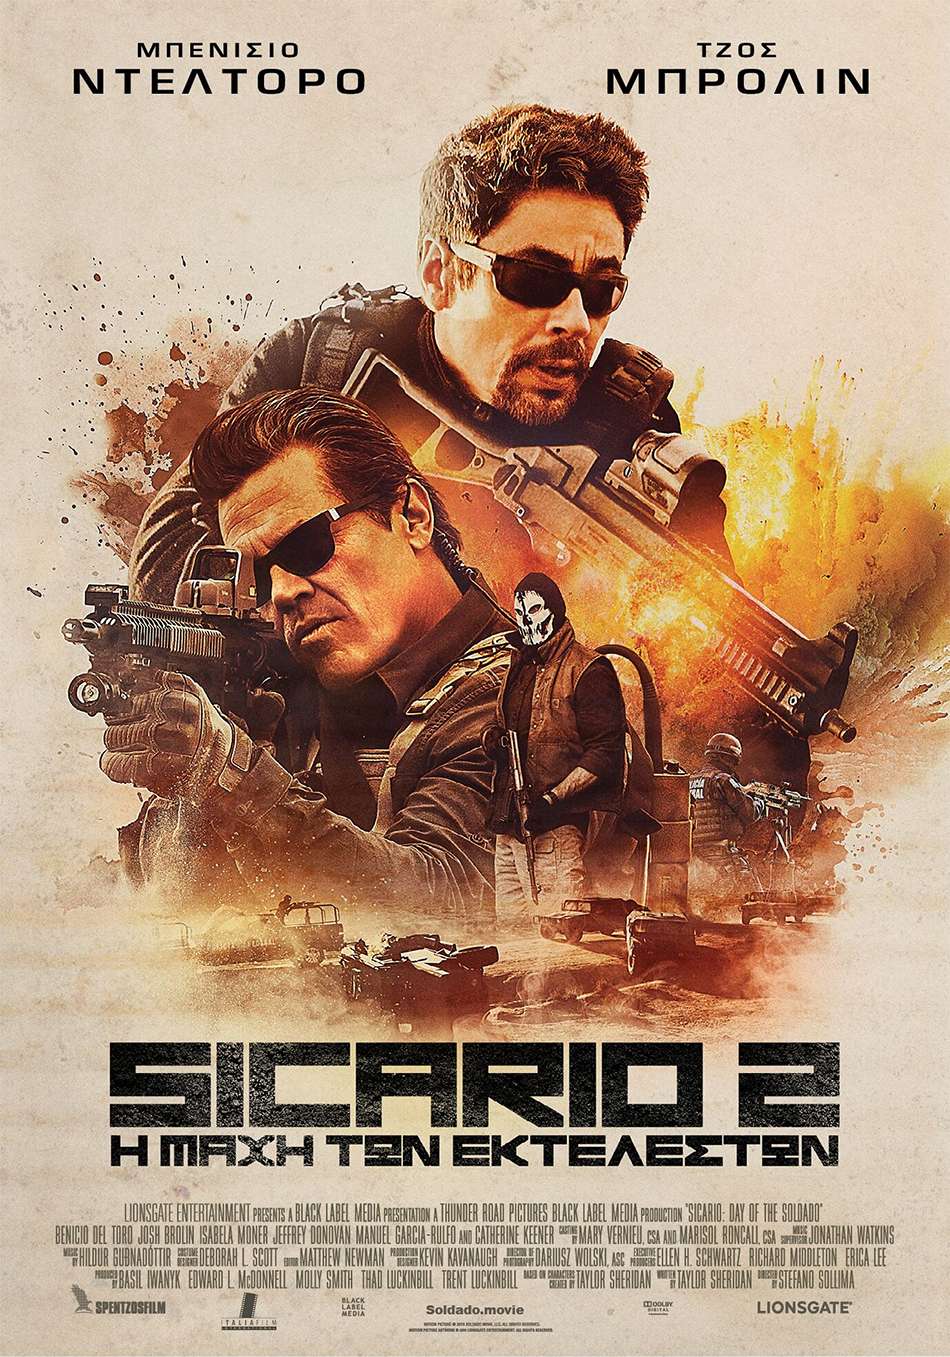 Sicario 2: Η μάχη των εκτελεστών (Sicario: Day of the Soldado) Poster Πόστερ